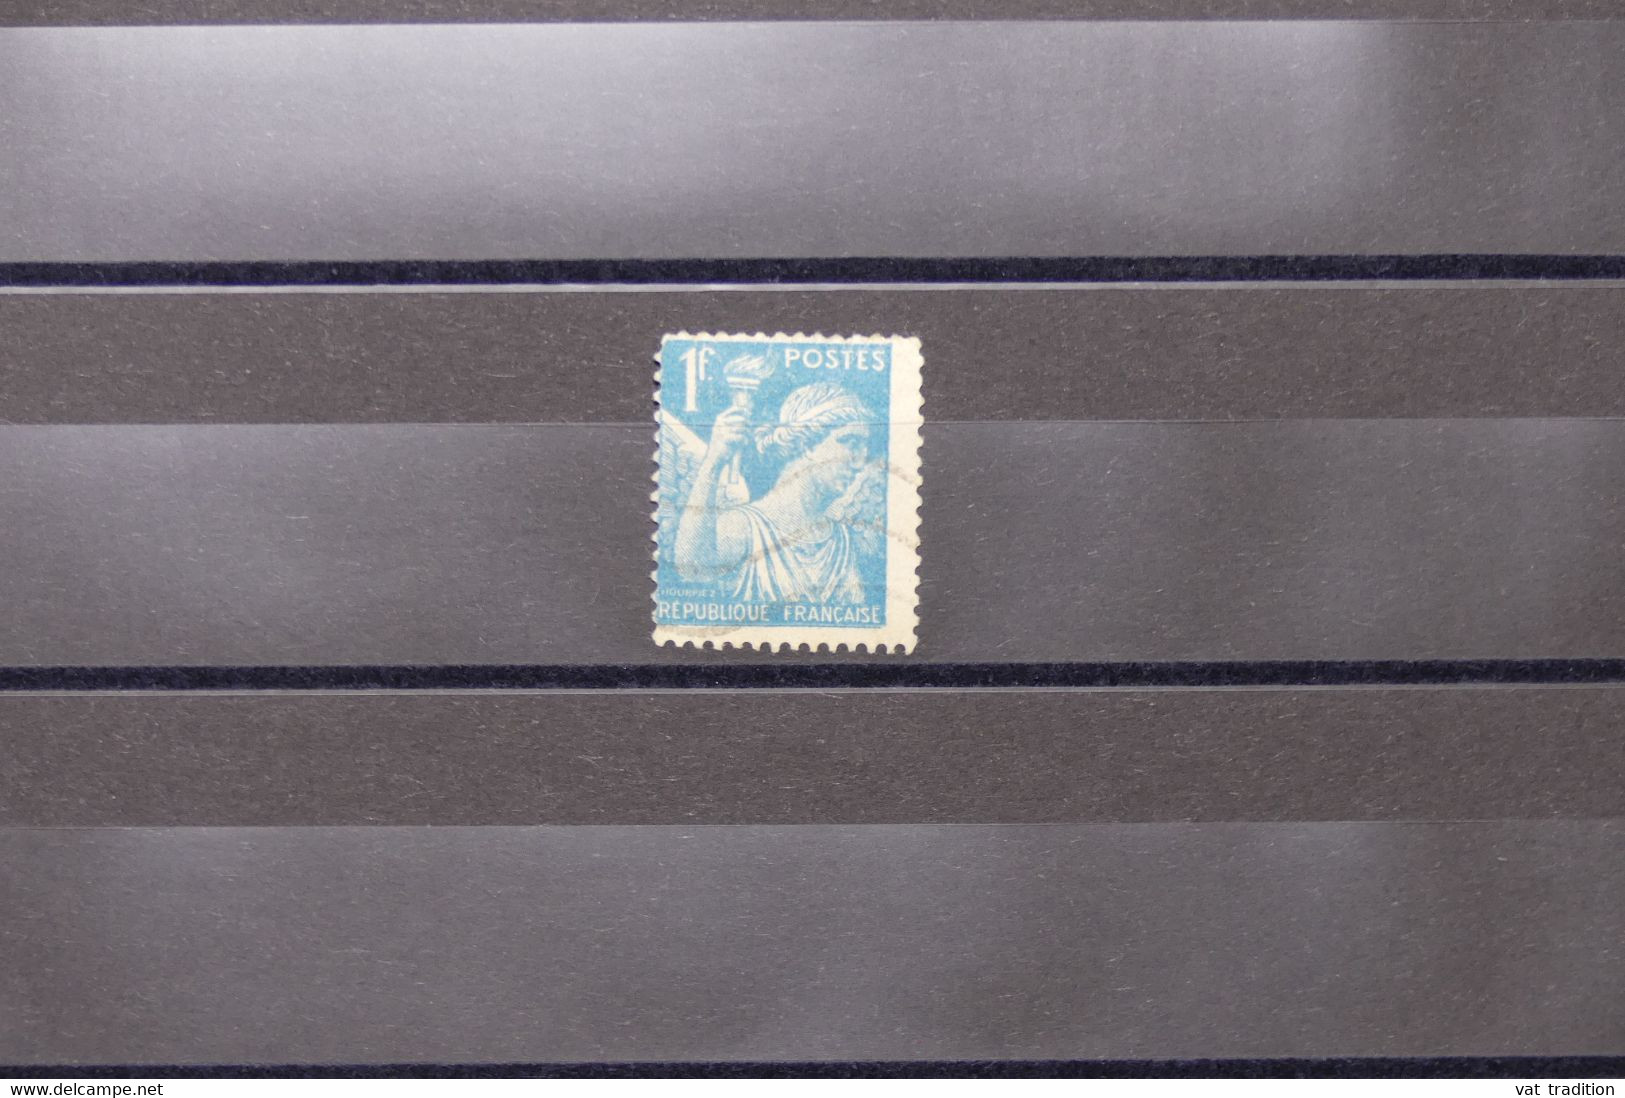 FRANCE - Variété - N° Yvert 650 - Type Iris - Papier Pelure - Oblitéré - L 74054 - Gebraucht